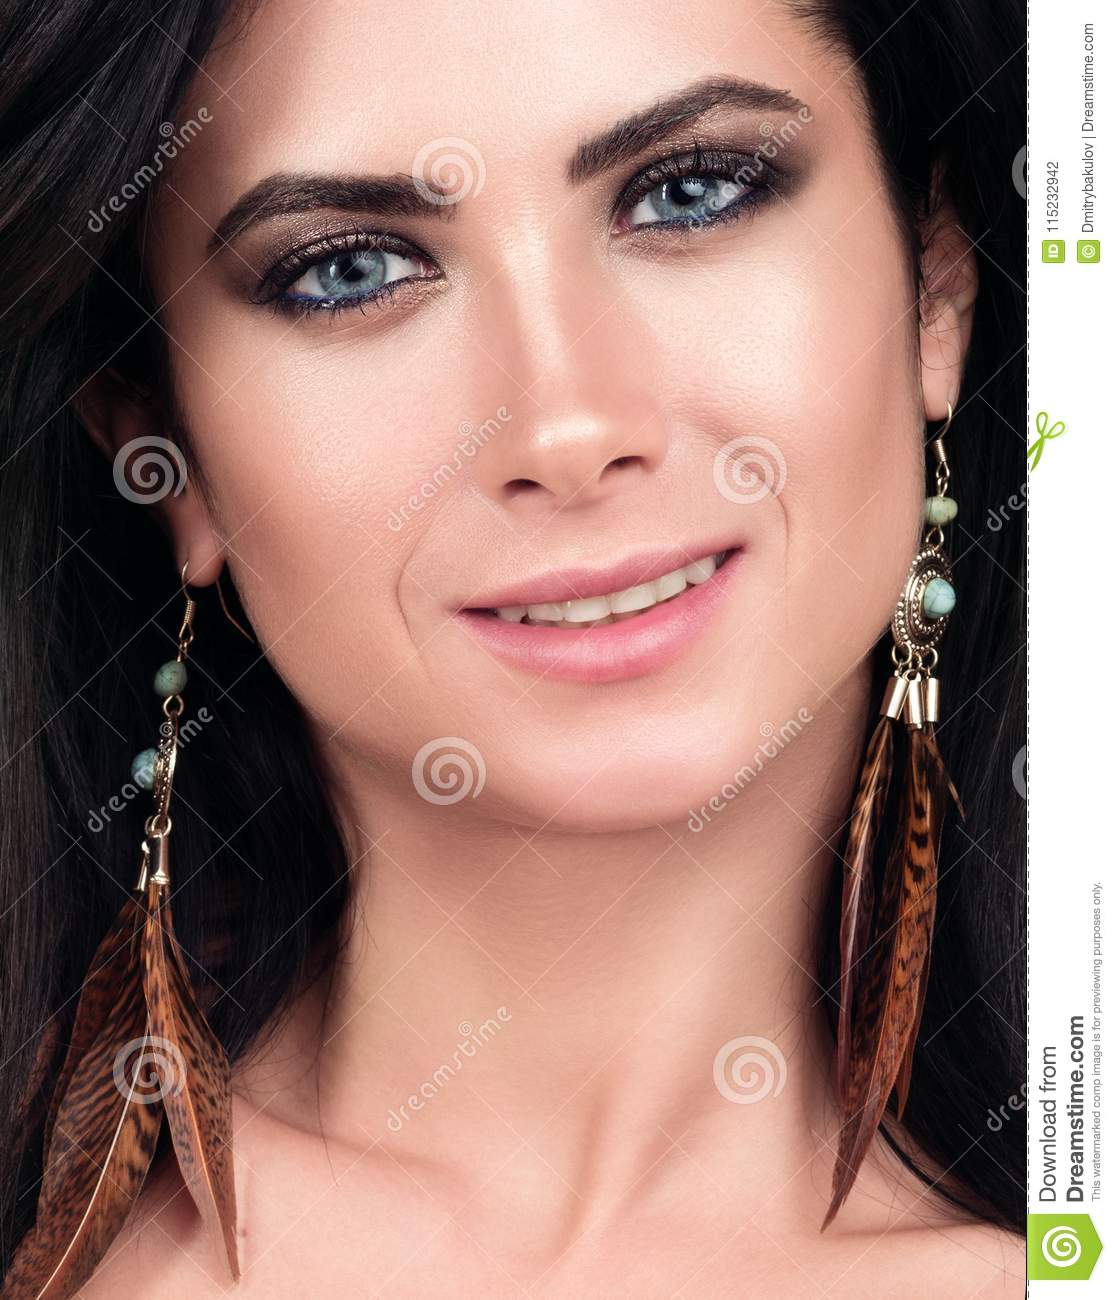 Blue Eyes Dark Makeup Closeup Portrait Of Young Beautiful Woman Dark Hair Blue Eyes And